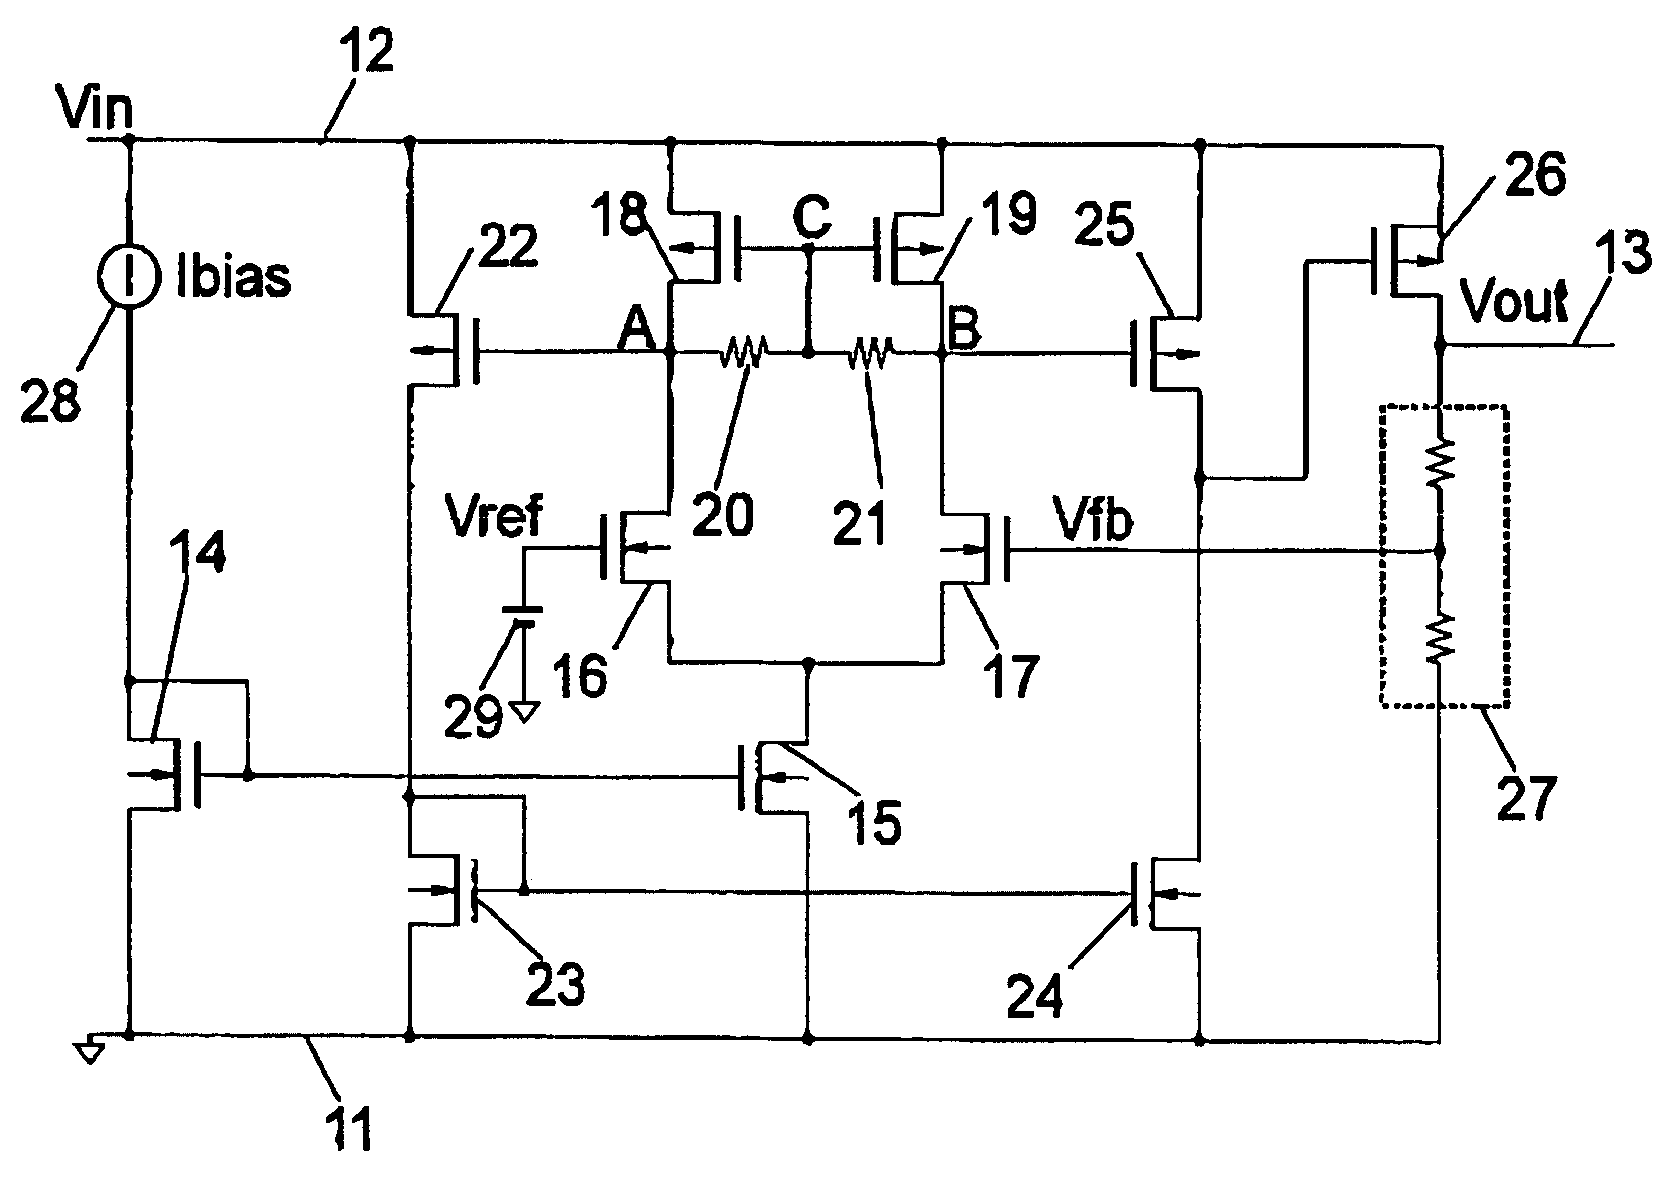 Voltage regulator with improved transient response